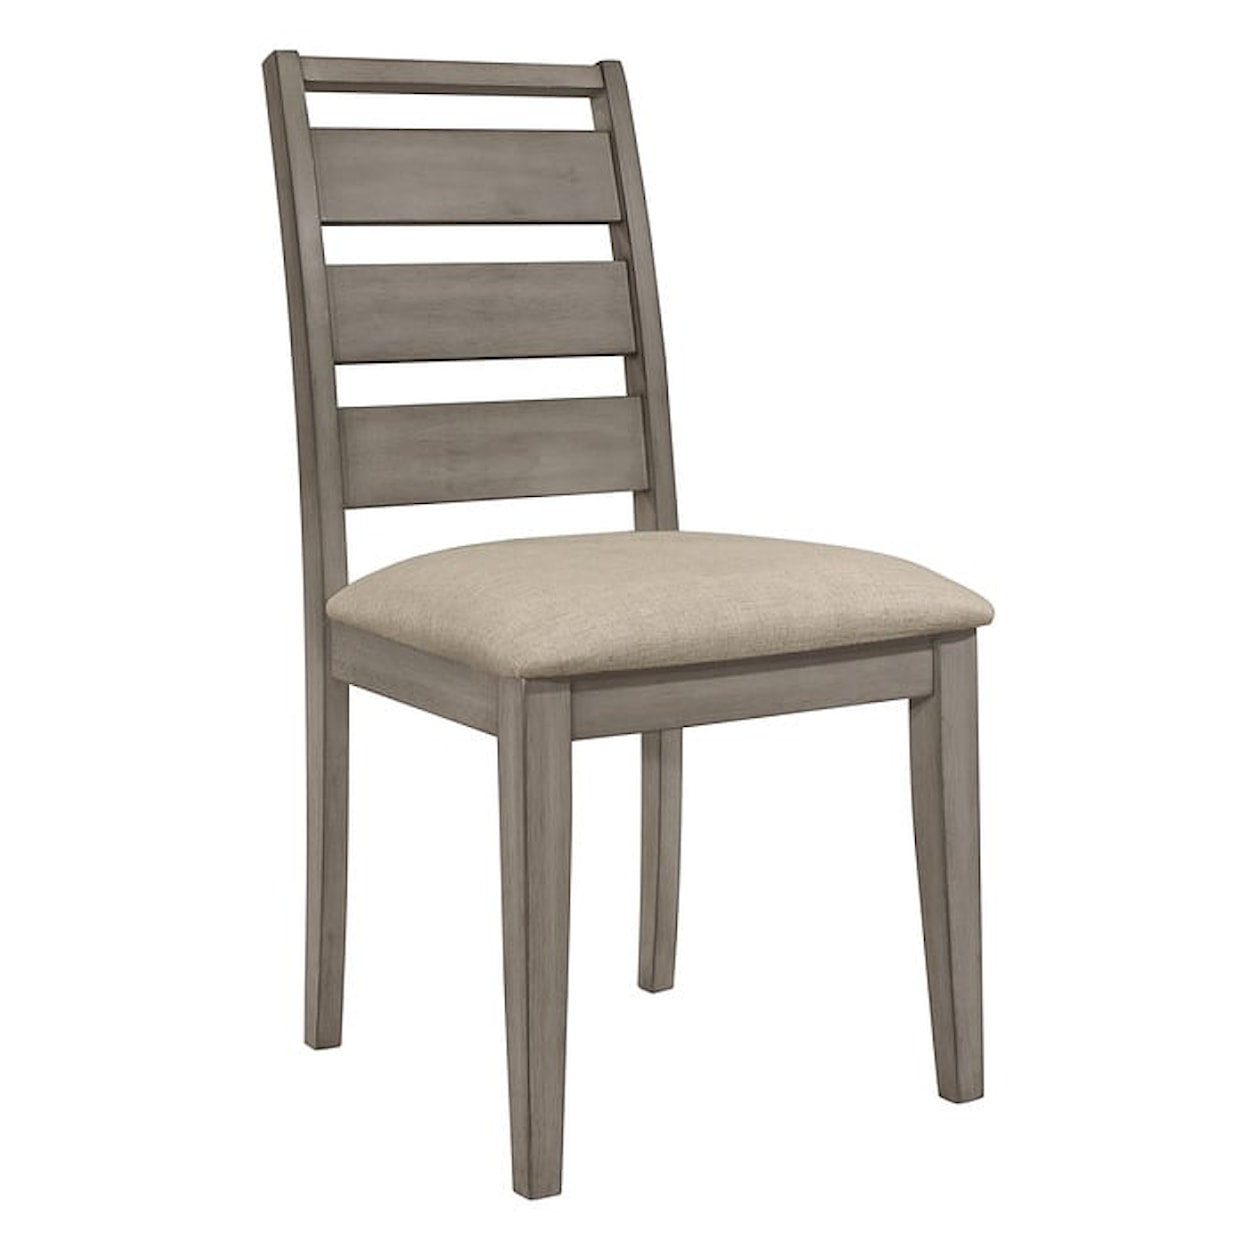 Homelegance Bainbridge Side Chair with Upholstered Seat